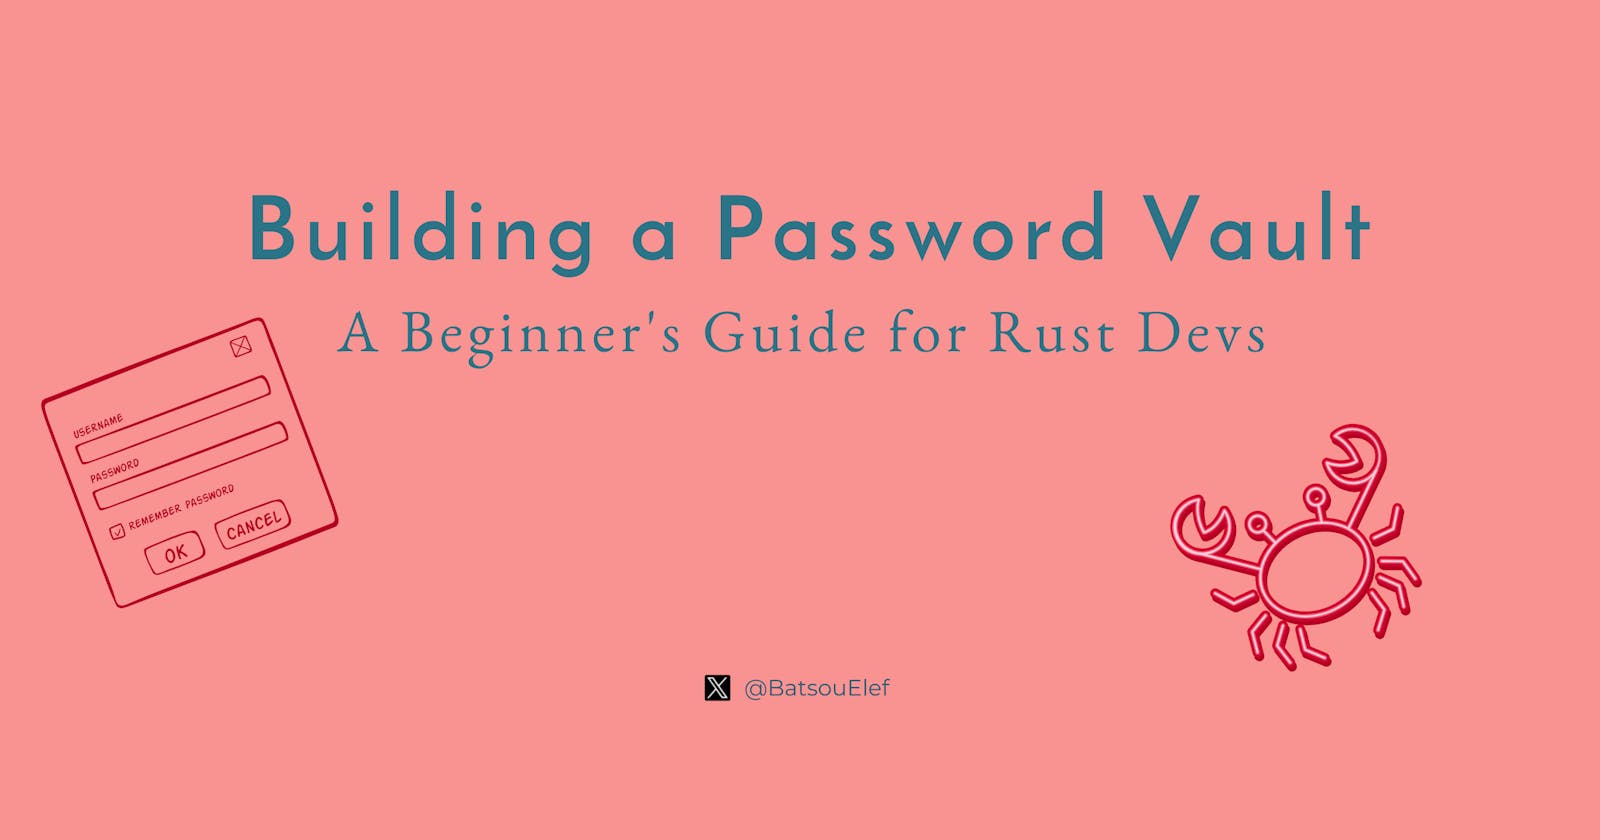 Building a Password Vault in Rust: A Beginner's Guide